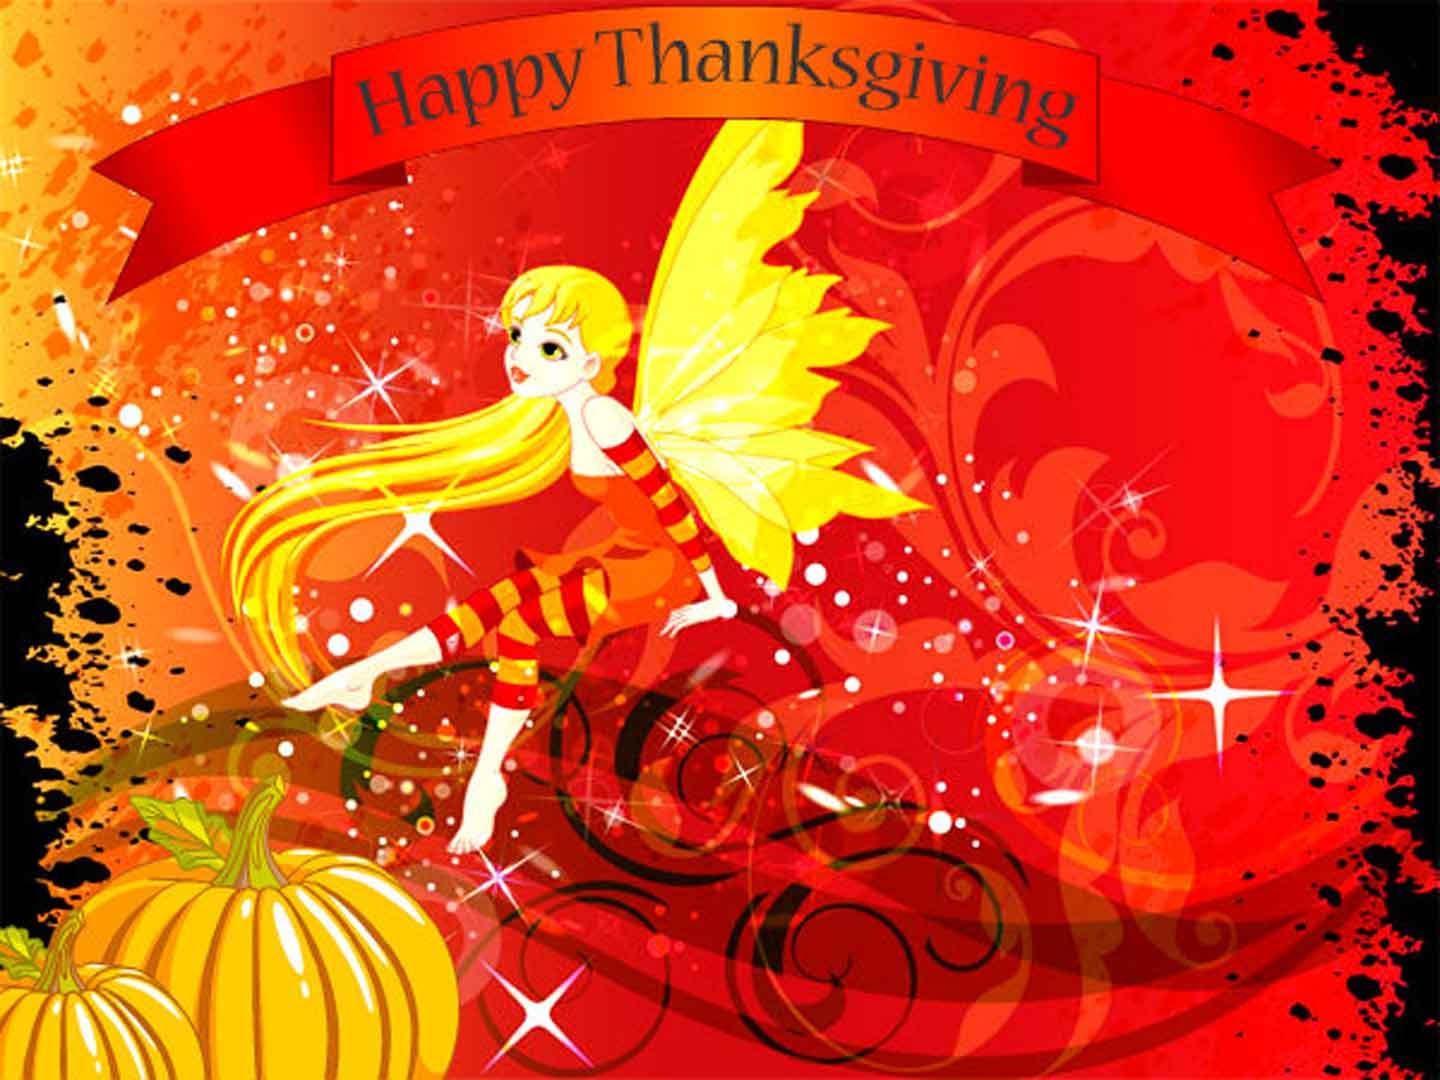 Happy Thanksgiving Day Desktop Background wallpaper Latest 2014